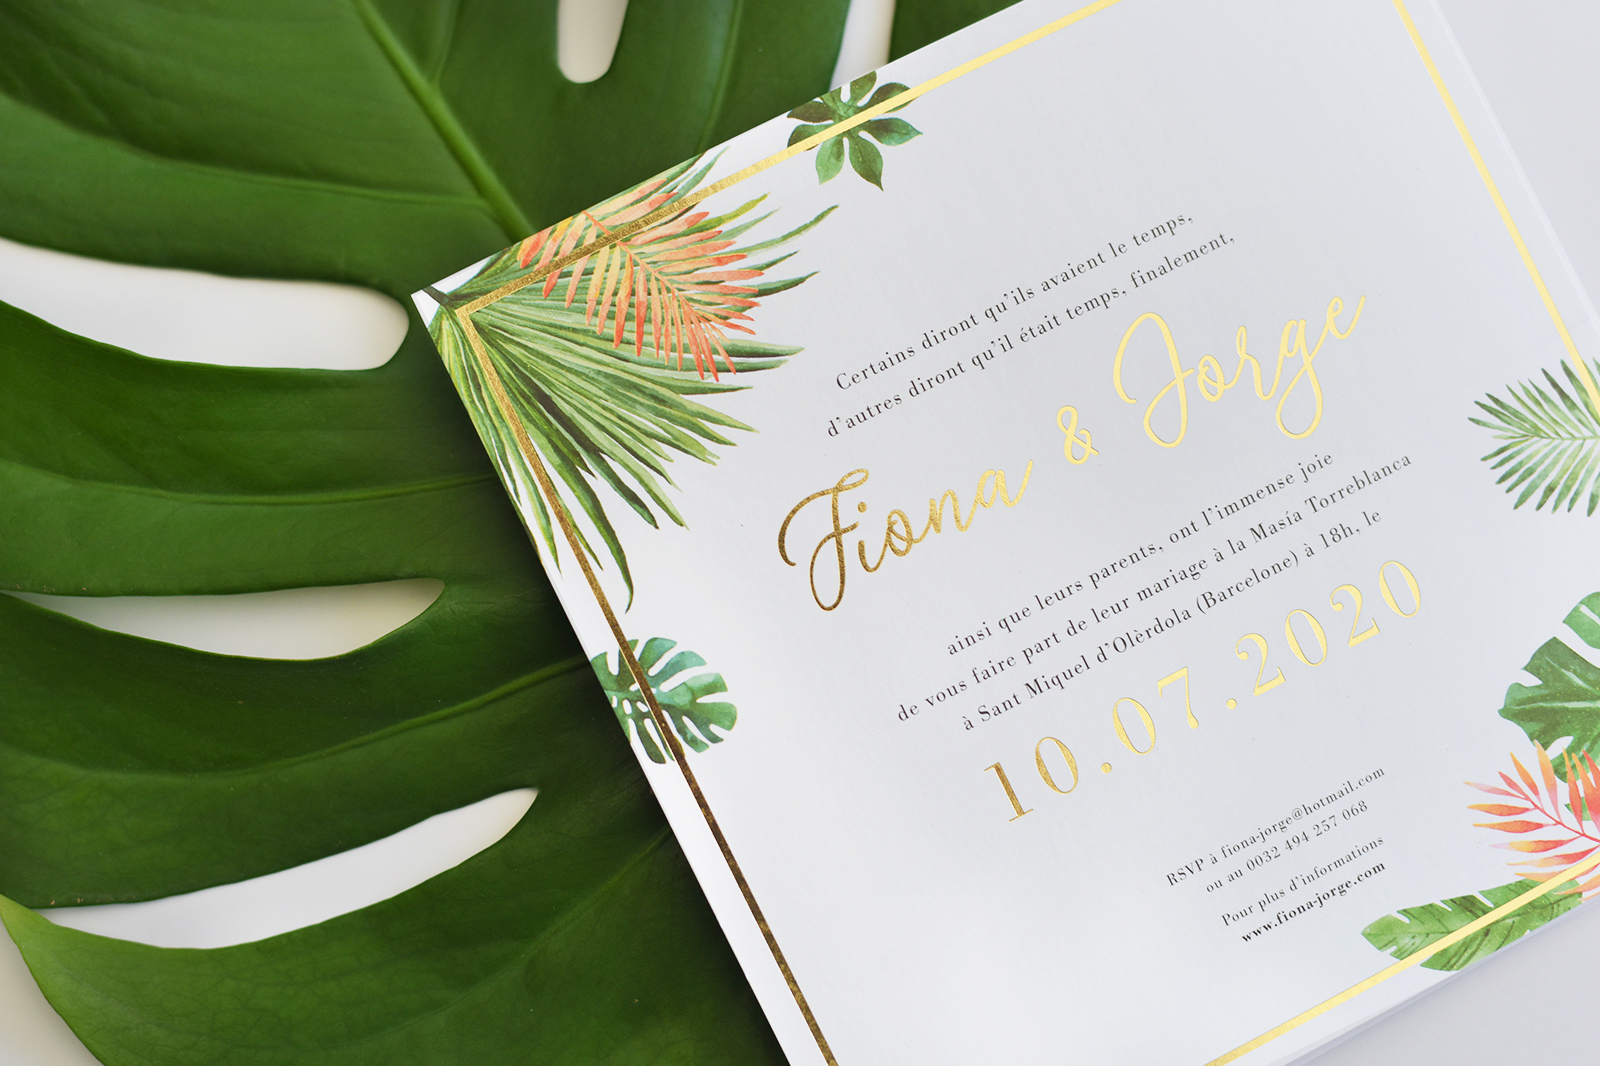 Fiona & Jorge wedding invitations